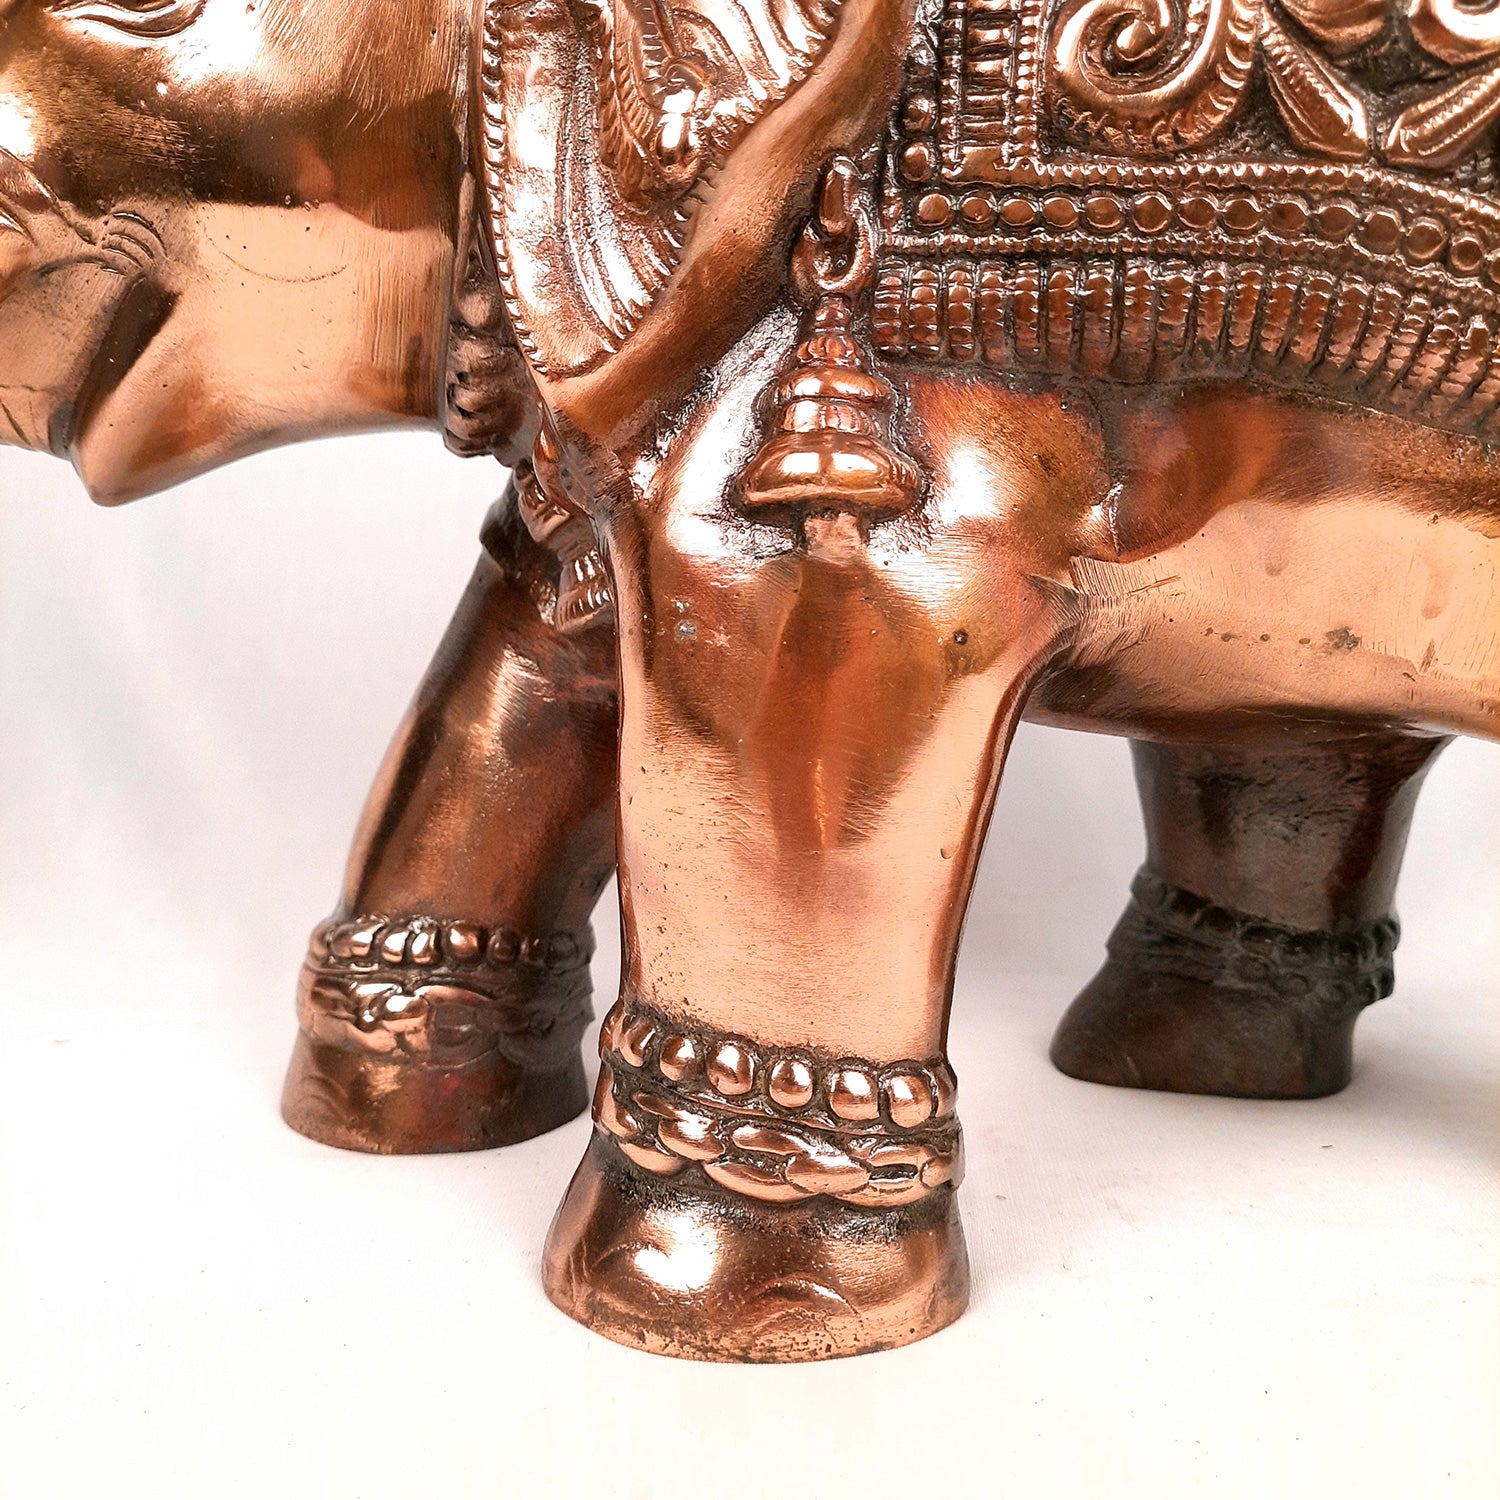 Elephant Statue Showpiece | Elephant Sculpture - for Vastu, Good Luck, Prosperity, Home & Table Decor & Gifts - 12 Inch - Apkamart #Style_Pack of 1